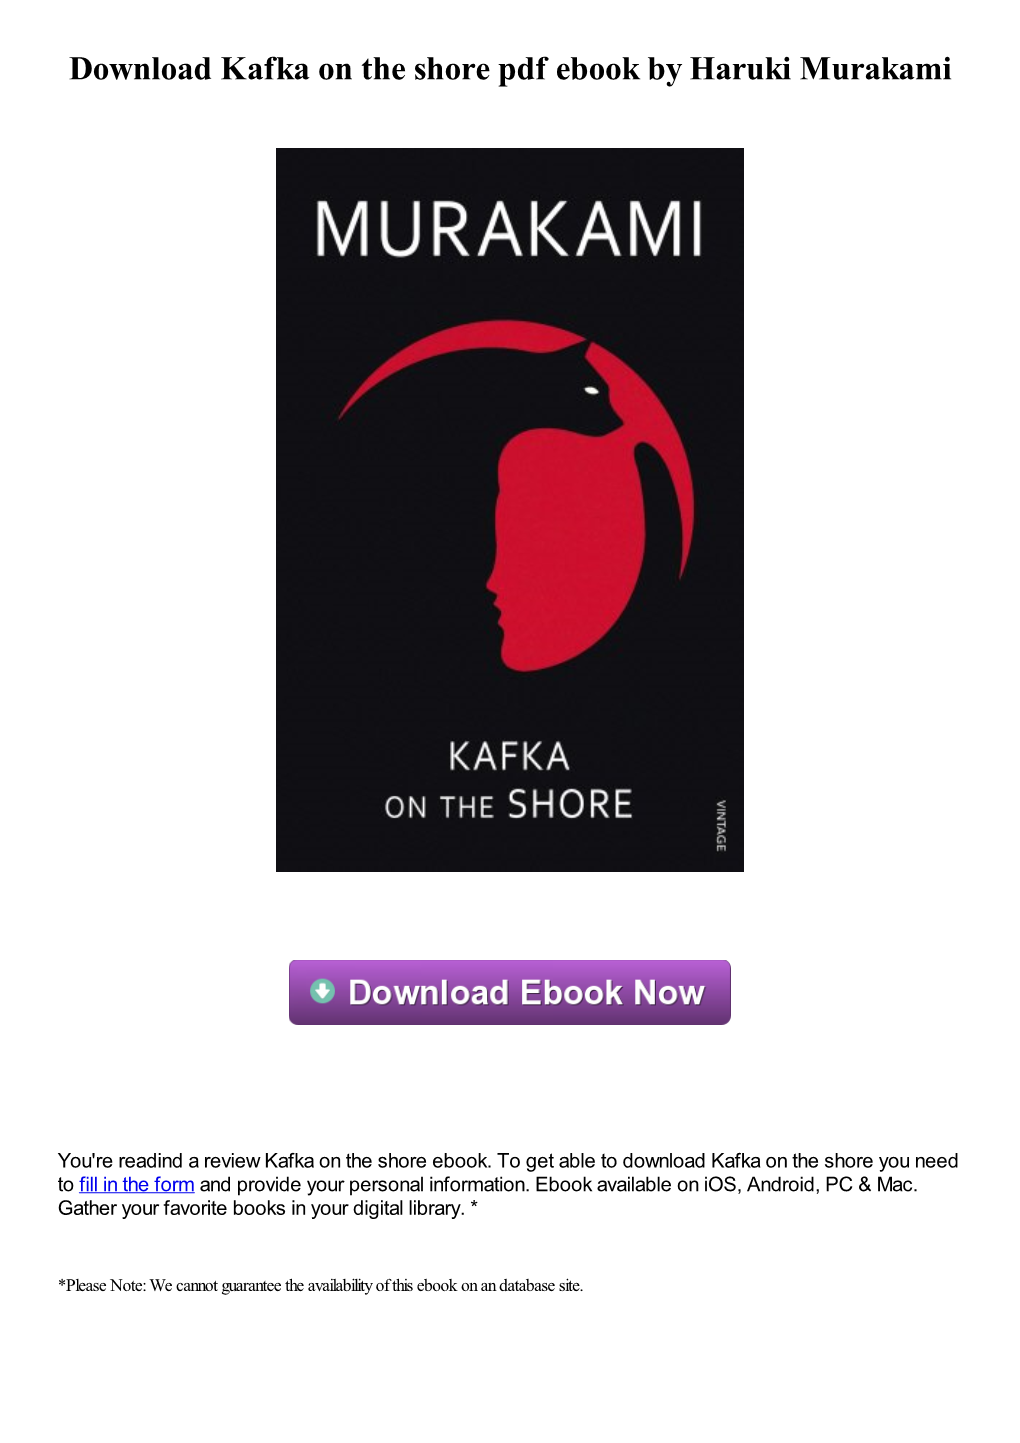 Download Kafka on the Shore Pdf Book by Haruki Murakami